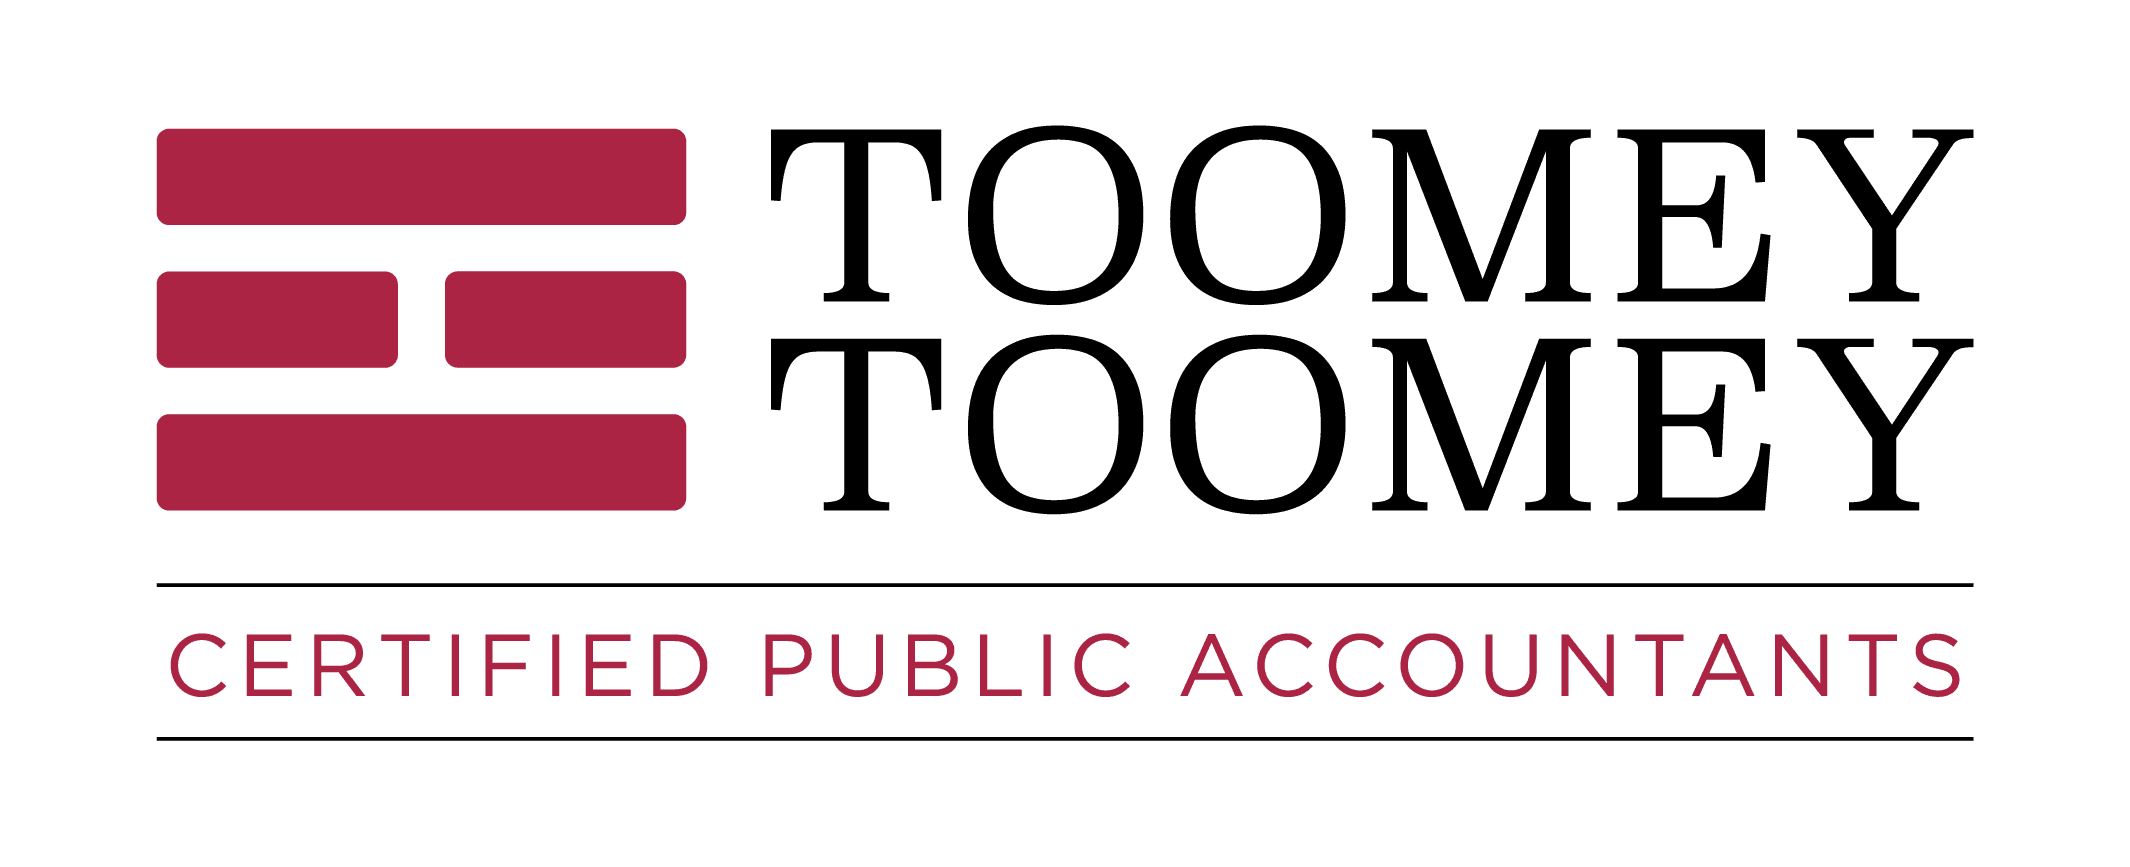 certified public accounting tax preparation burlington, washington Toomey and Toomey Skagit CPA